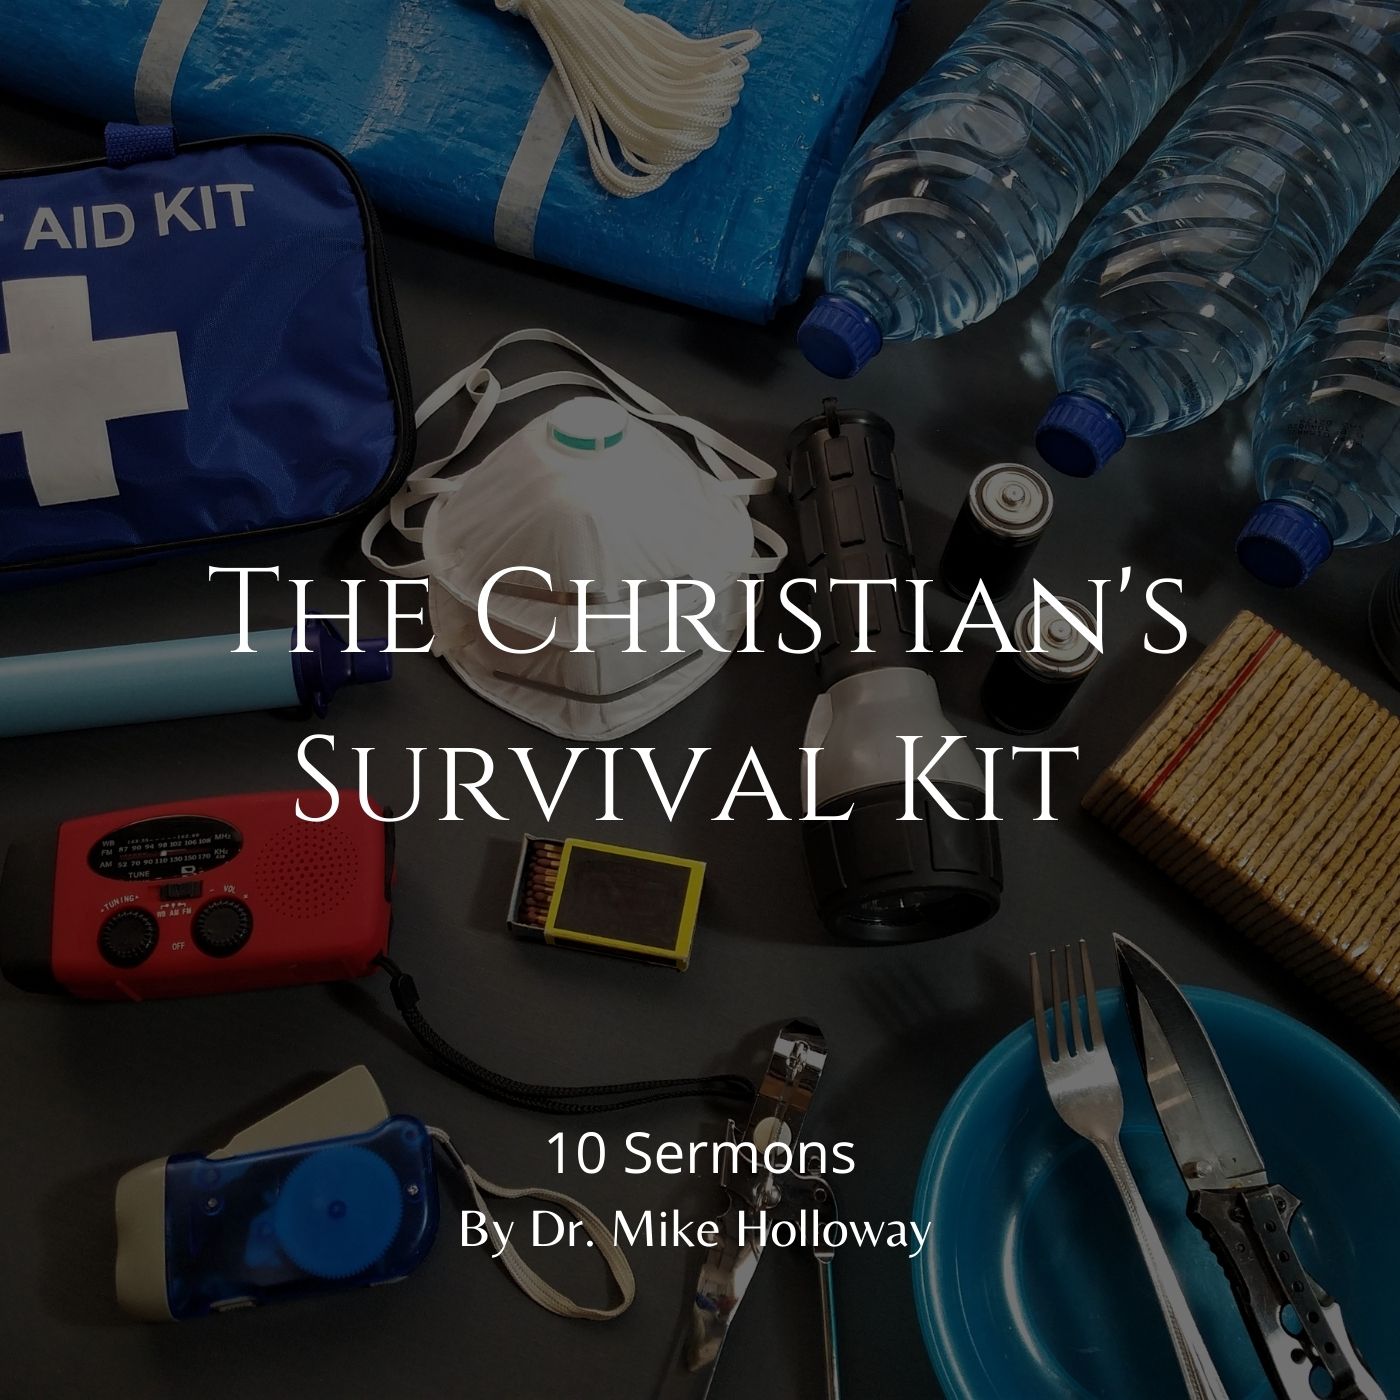 The Christian’s Survival Kit